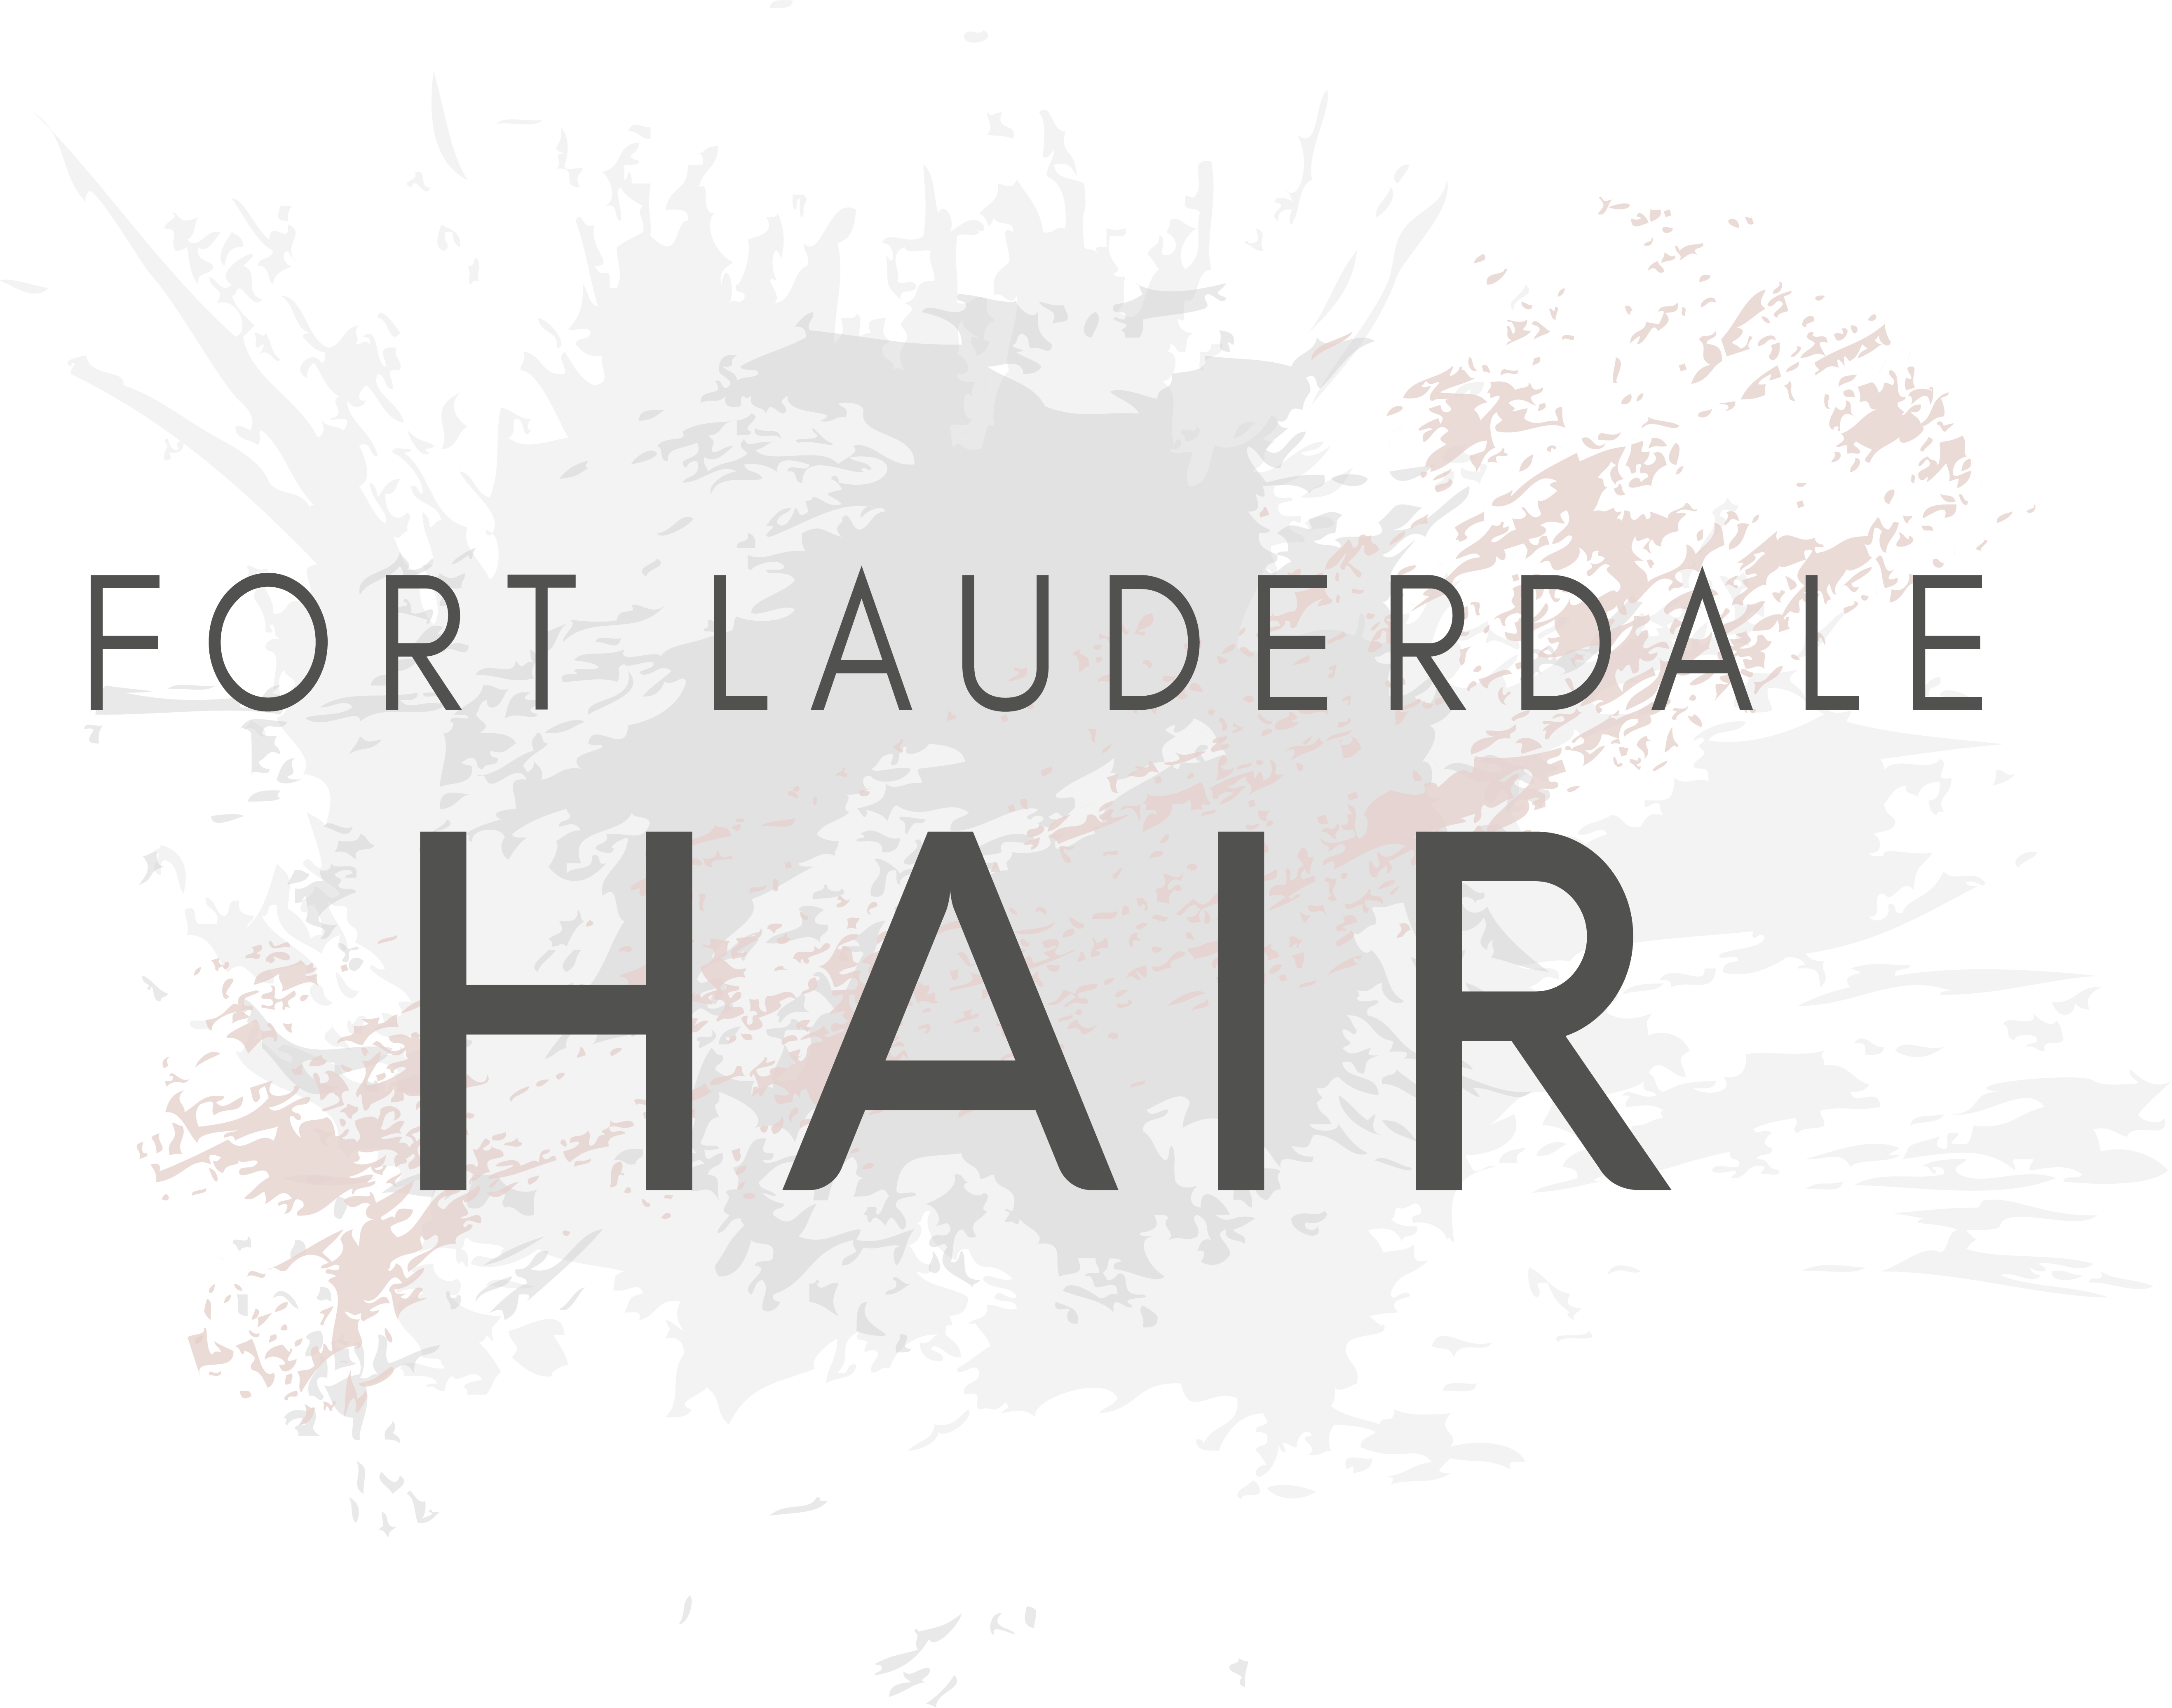 Fort Lauderdale Hair